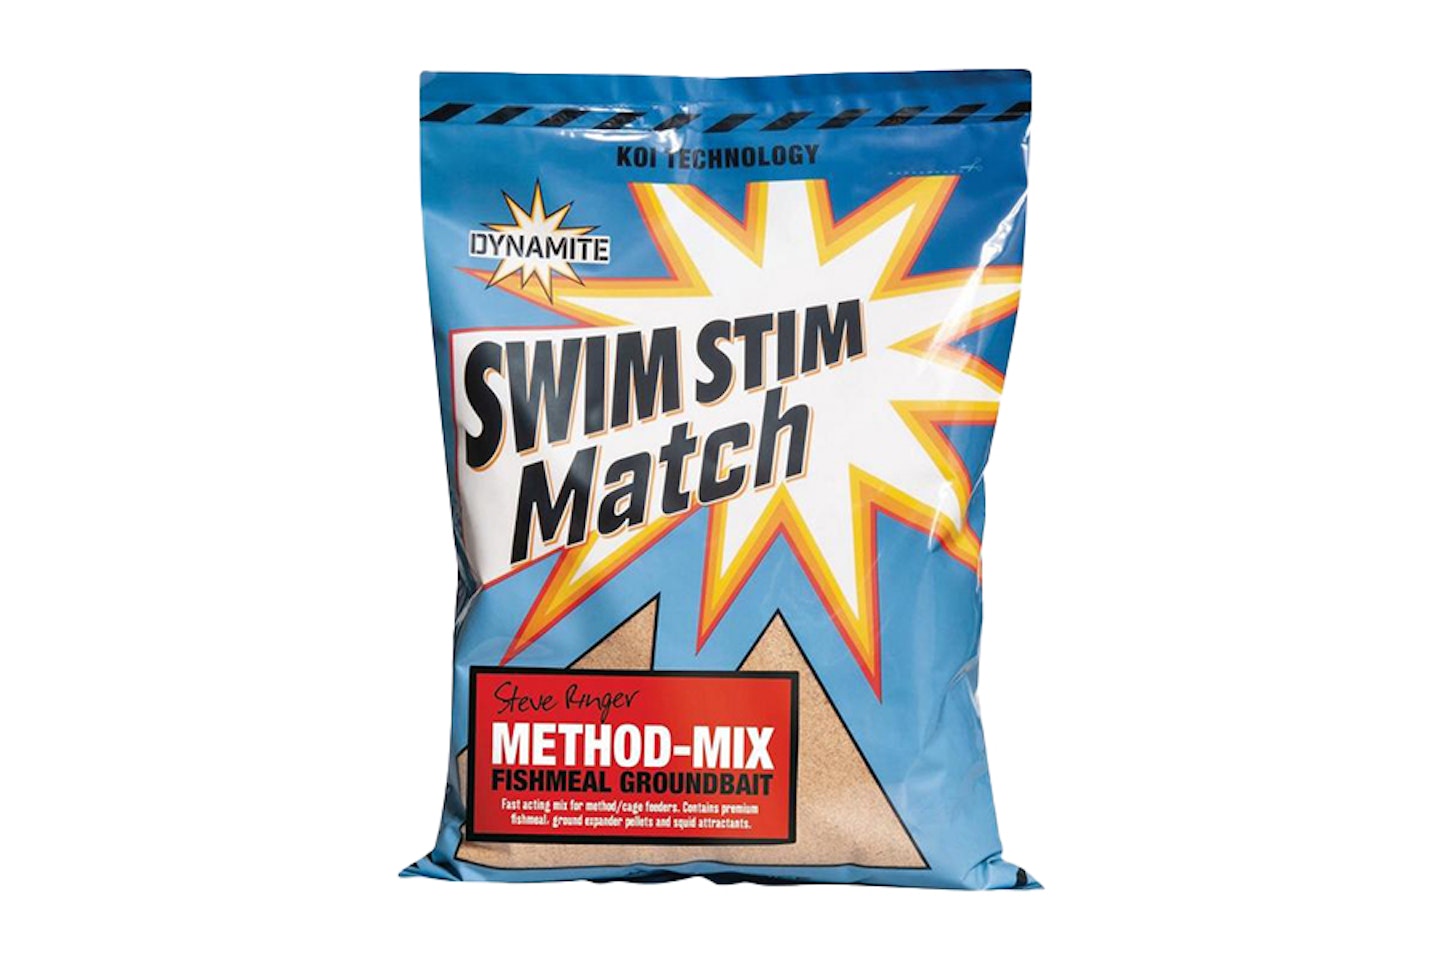 Dynamite Swim Stim Match Method Mix